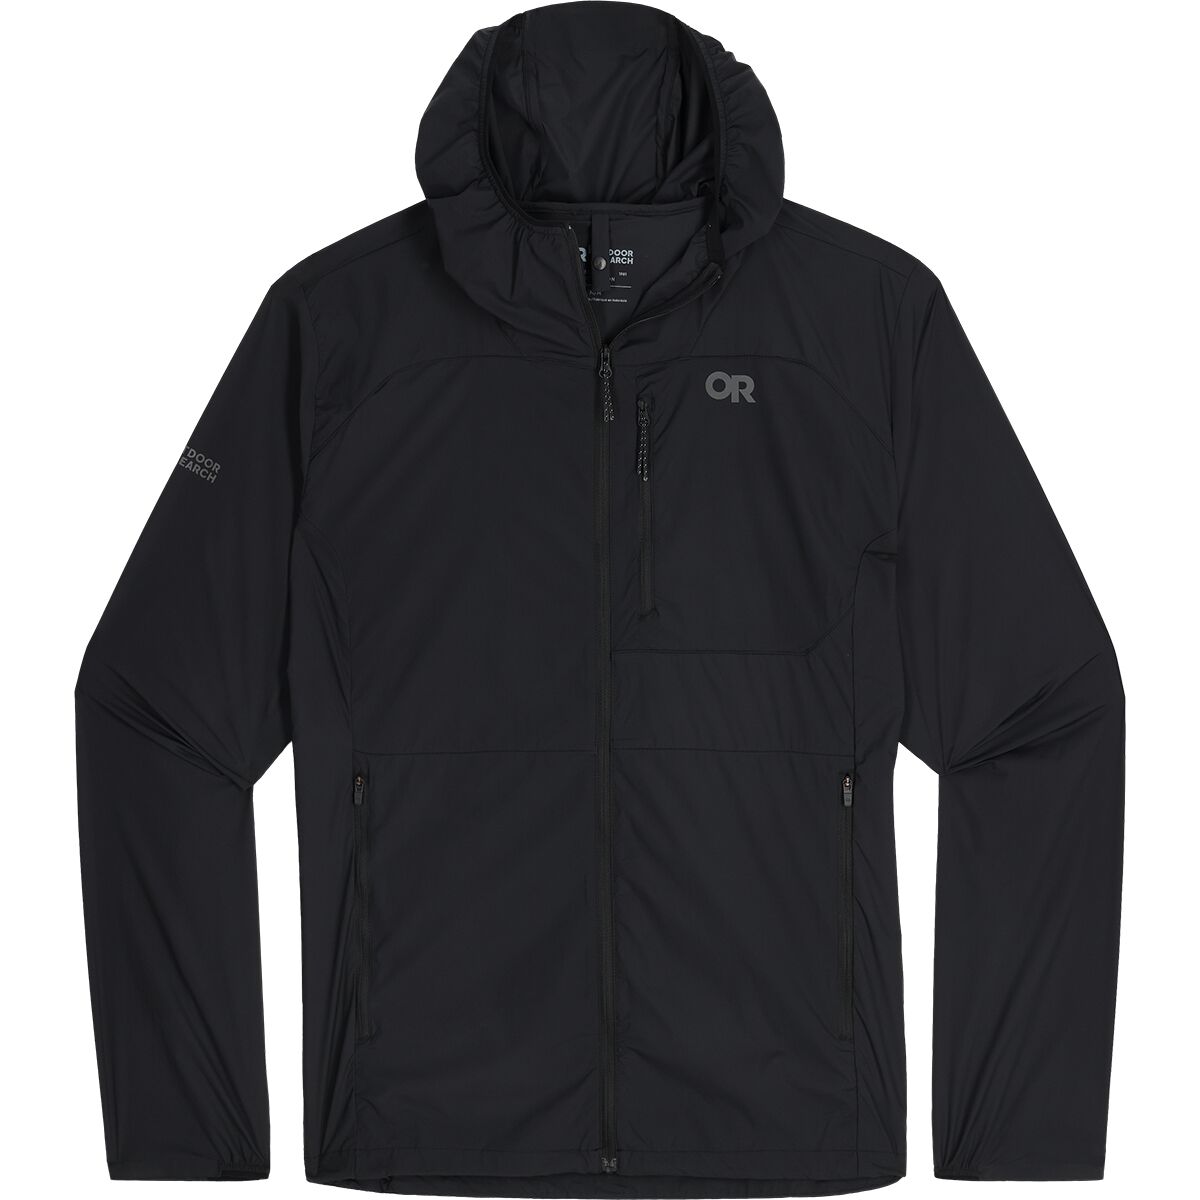 Куртка shadow wind с капюшоном Outdoor Research, черный great outdoor jacket contrast colors breathable casual spring jacket spring coat outdoor coat